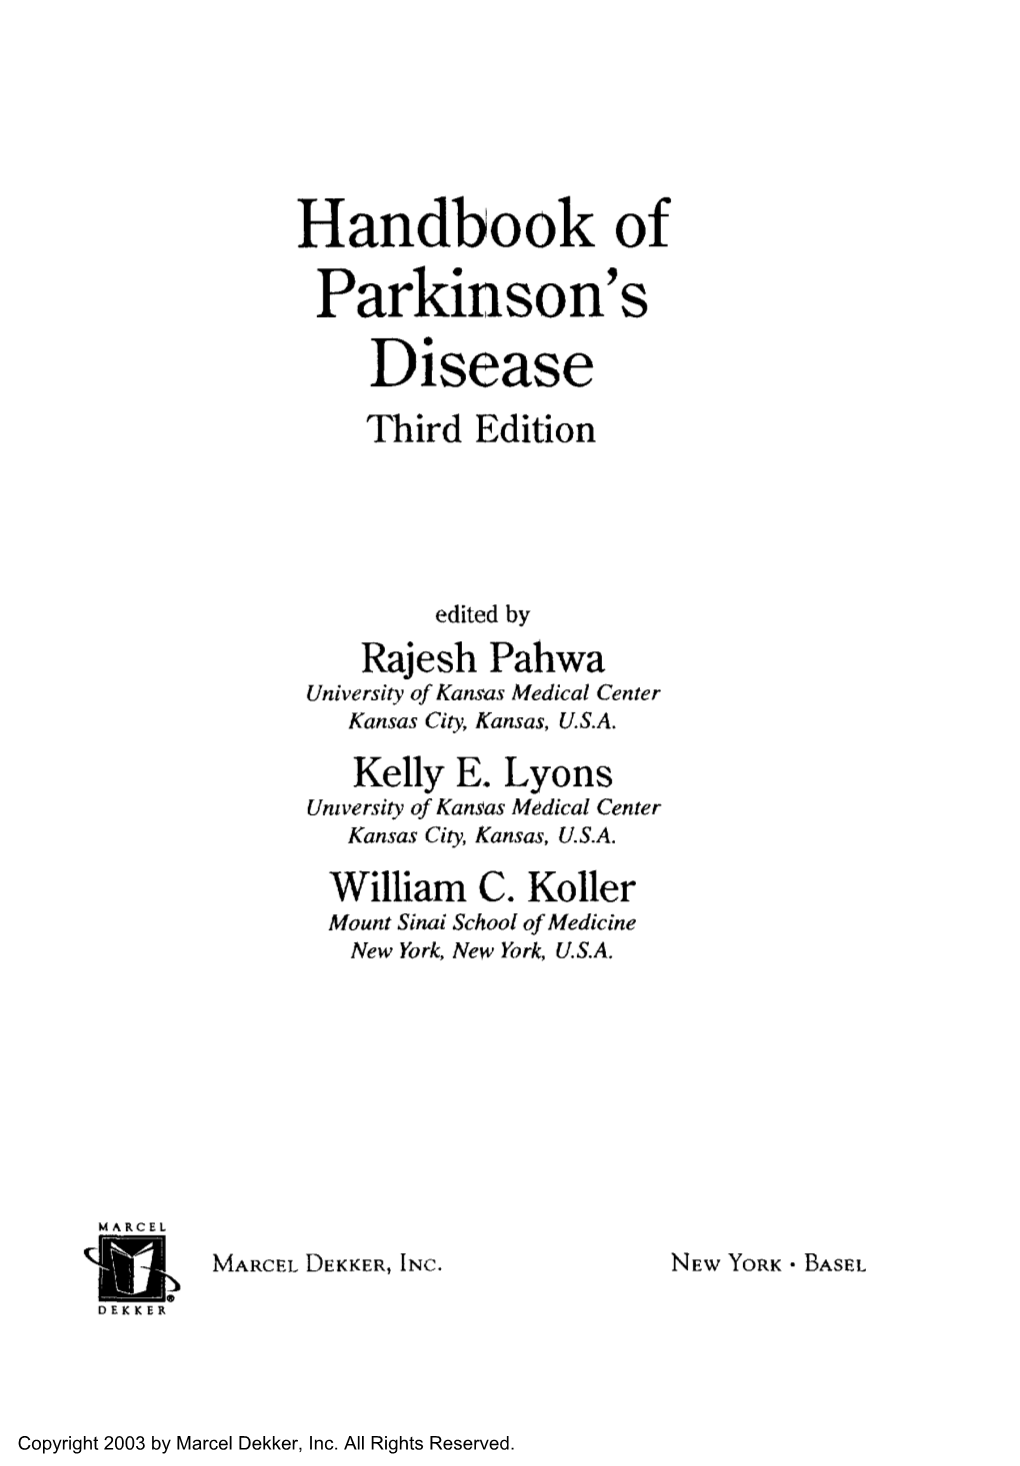 Handbook of Parkinson's Disease Third Edition